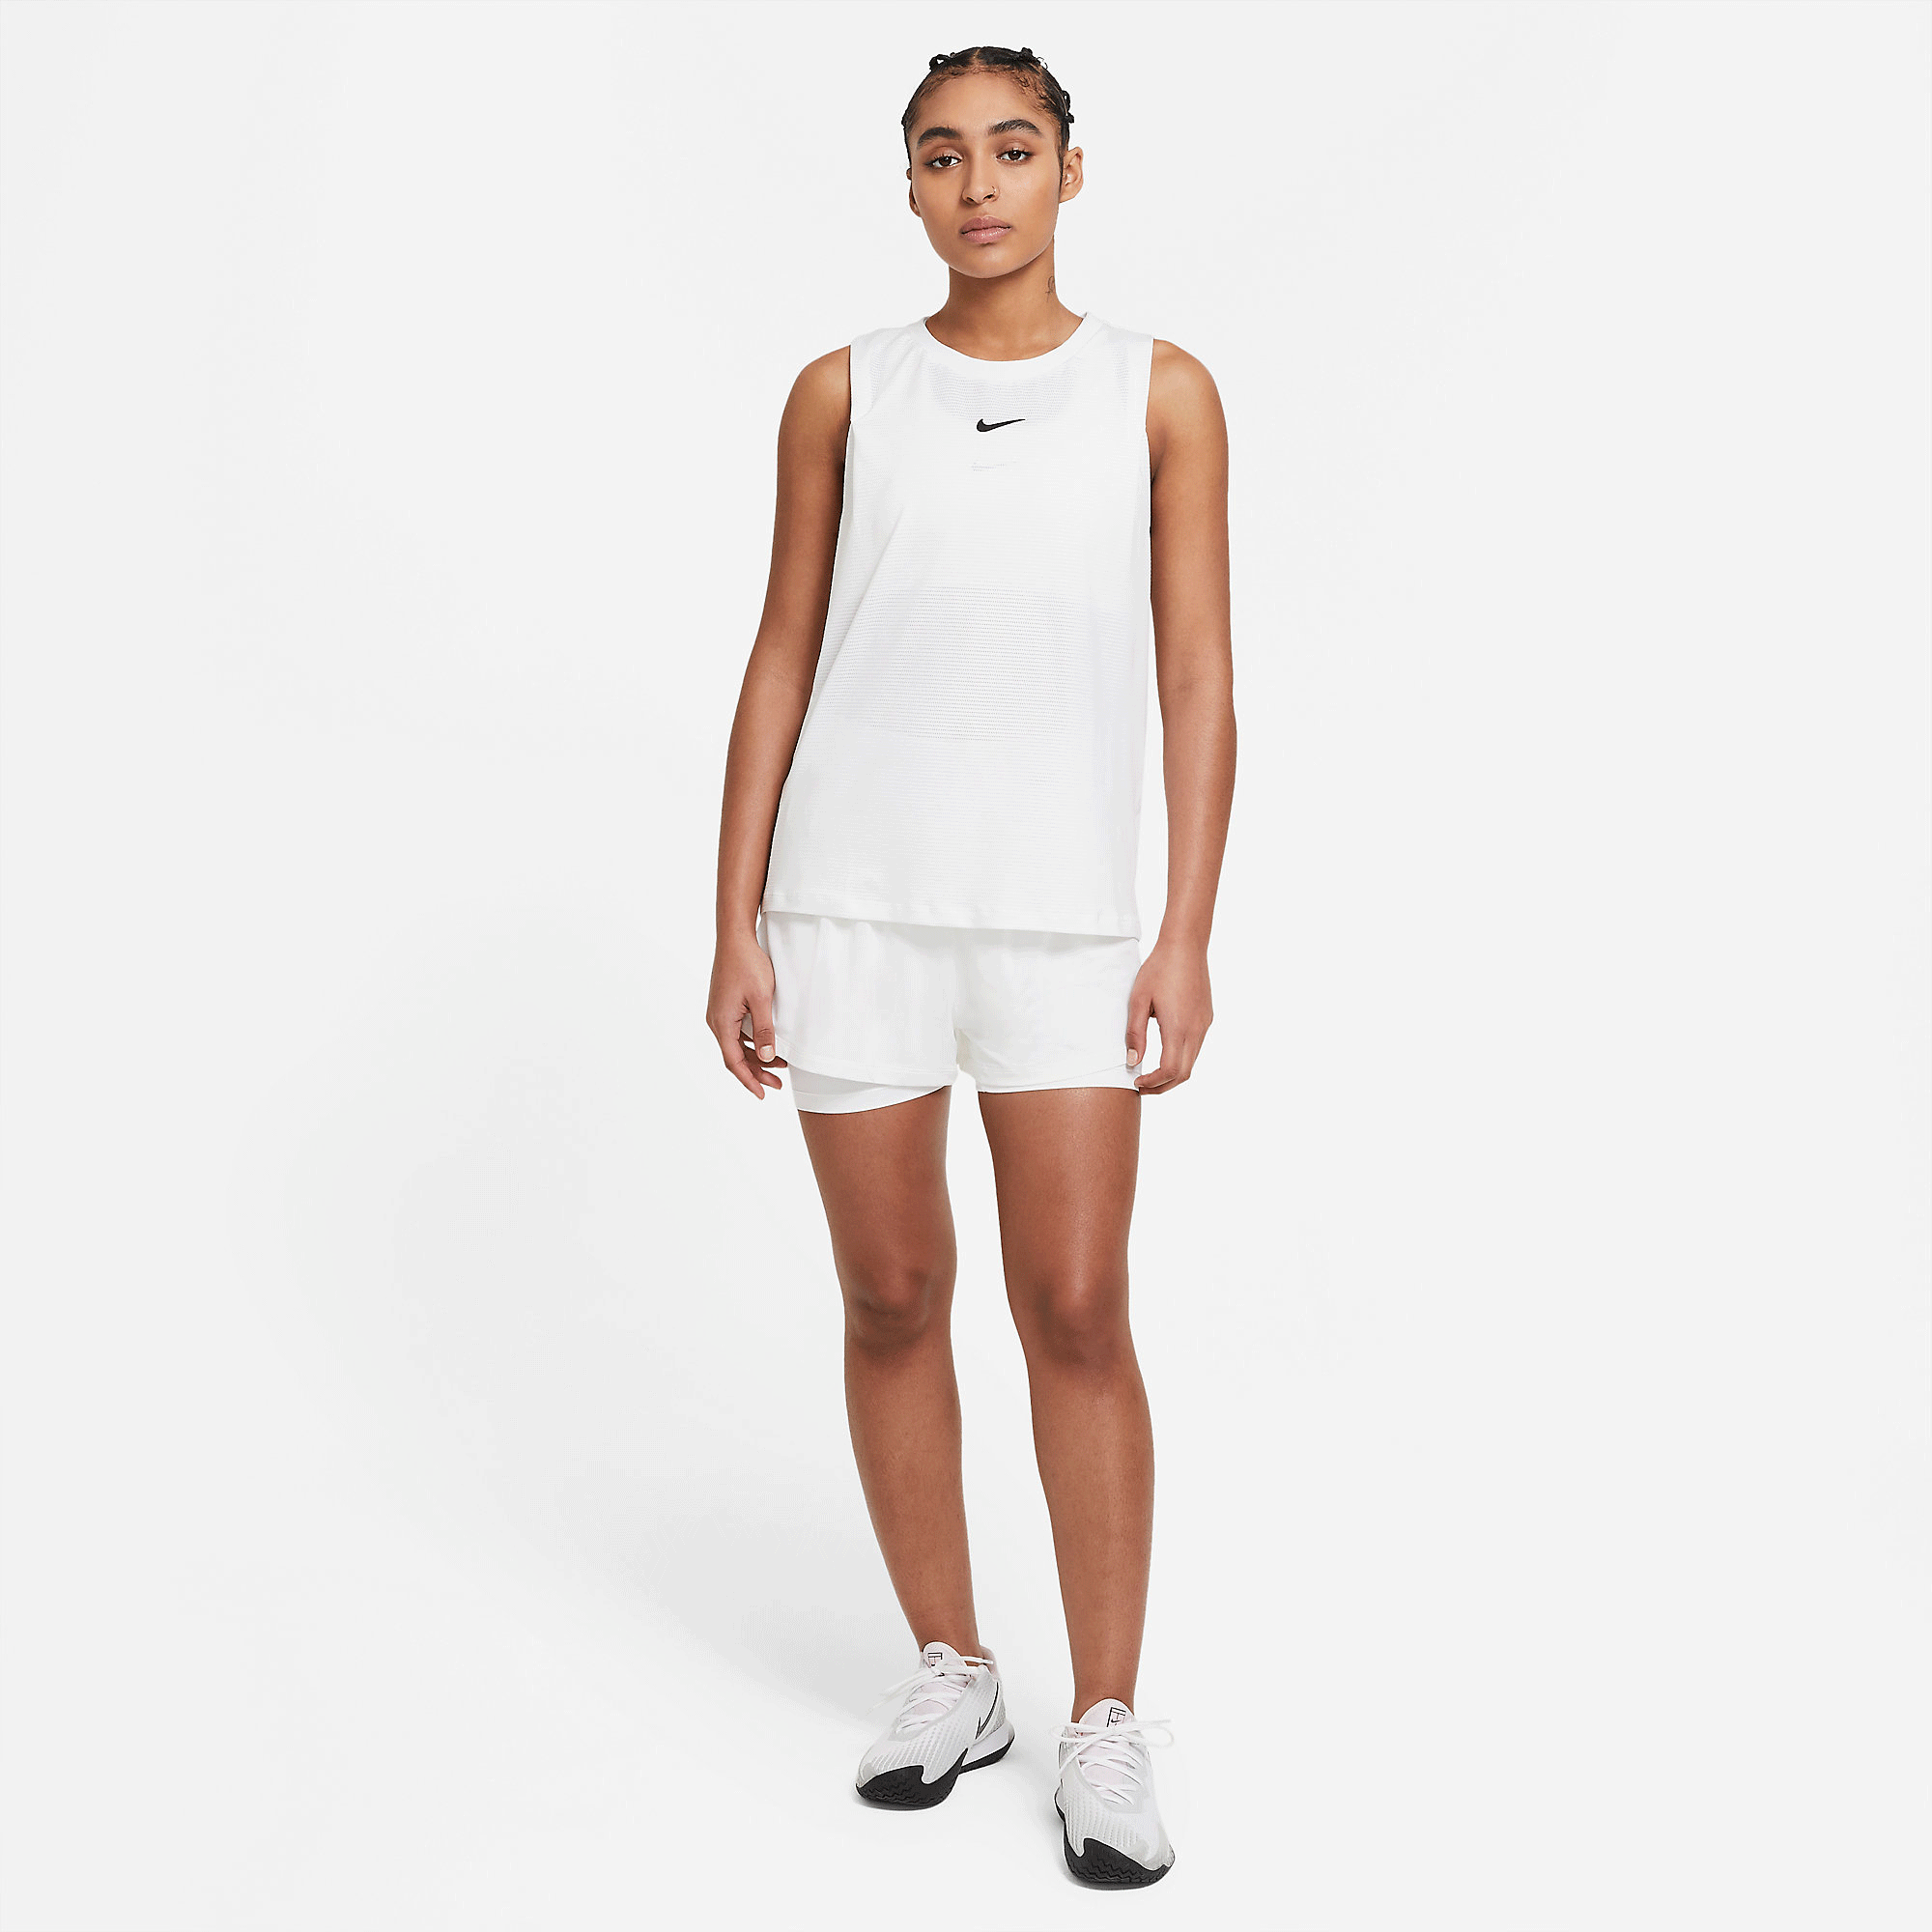 Nike Womens Advantage Tennis Tank - White - Tennisnuts.com